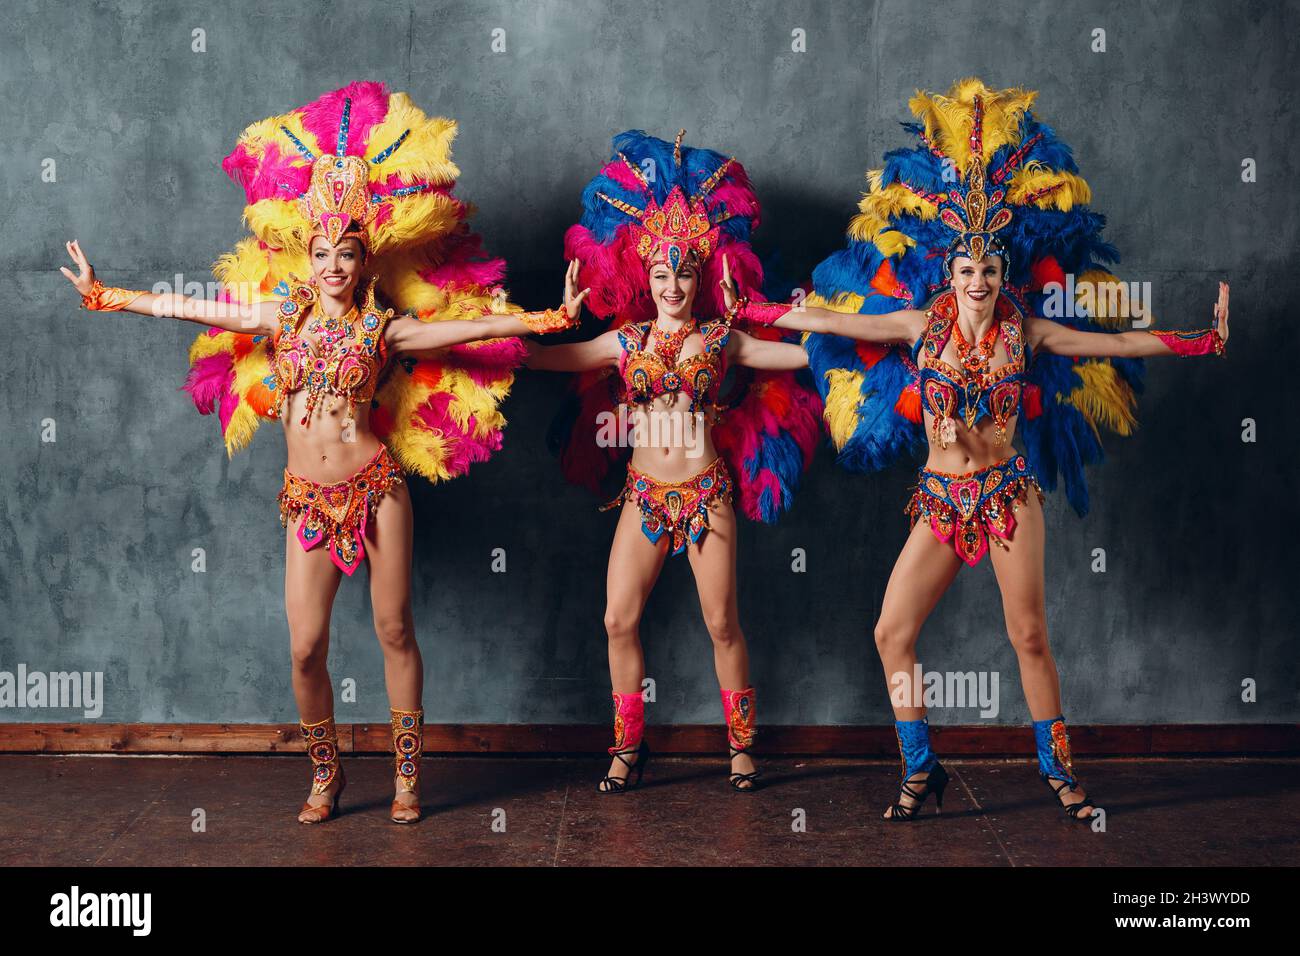 Three woman dancing in costumes, Brazilian Carnival Samba Dance